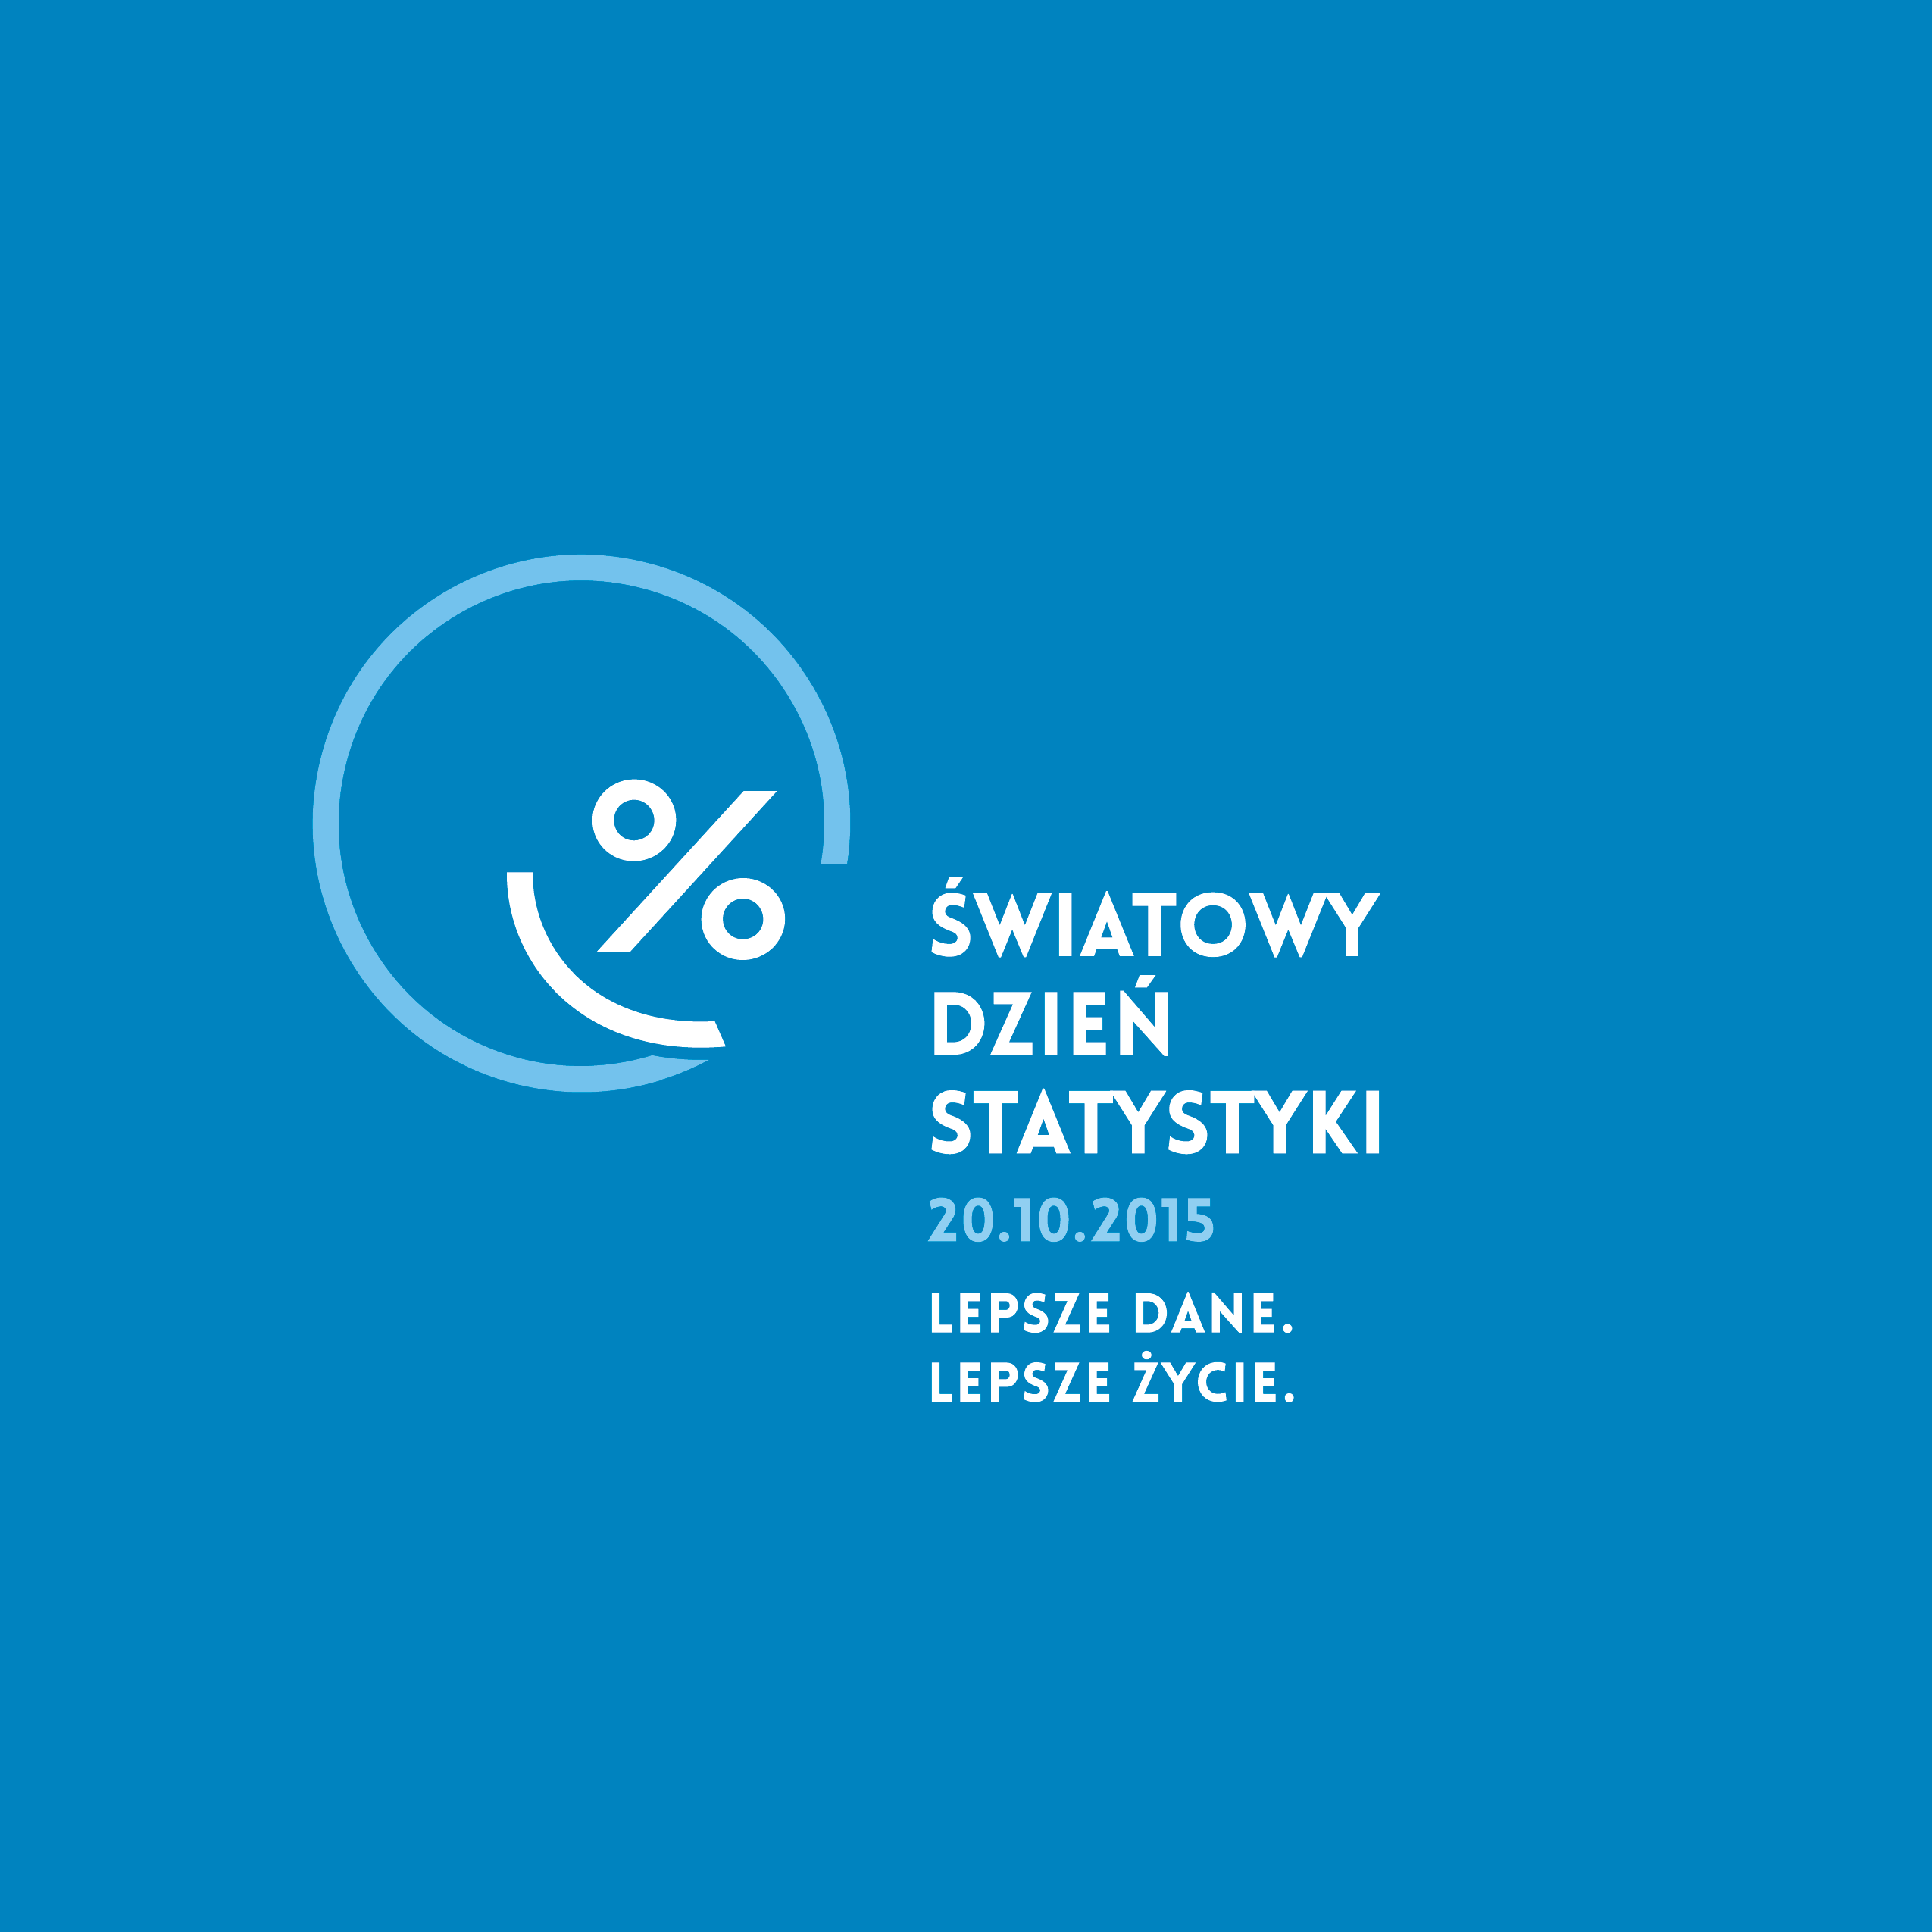 World Statistics Day Logo in Polish